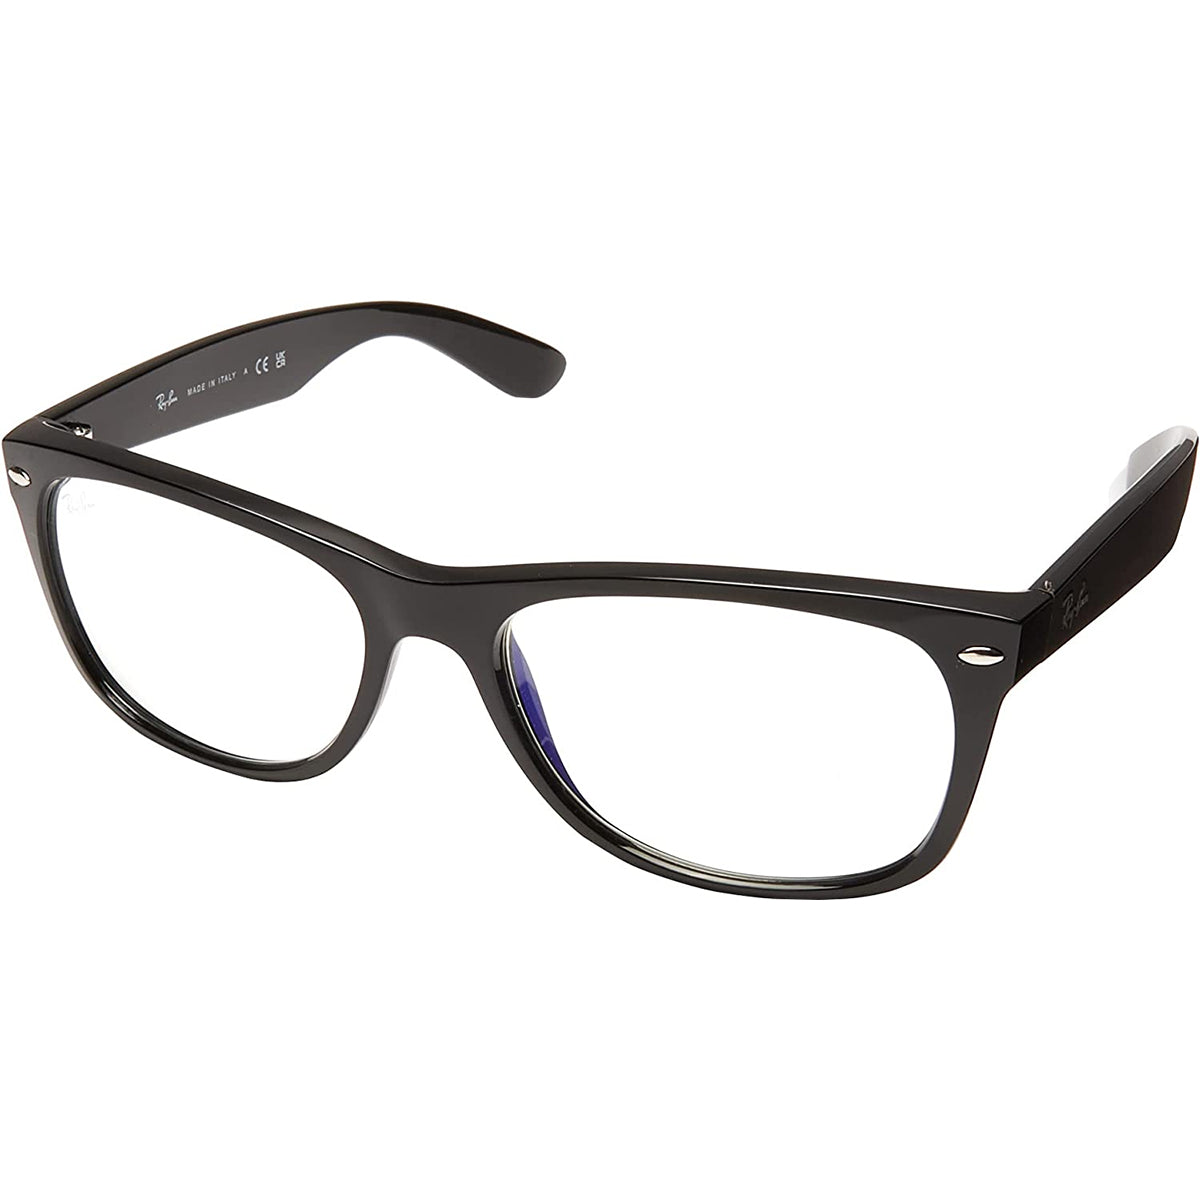 Ray-Ban New Wayfarer Blue-Light Clear Adult Lifestyle Sunglasses-0RB2132